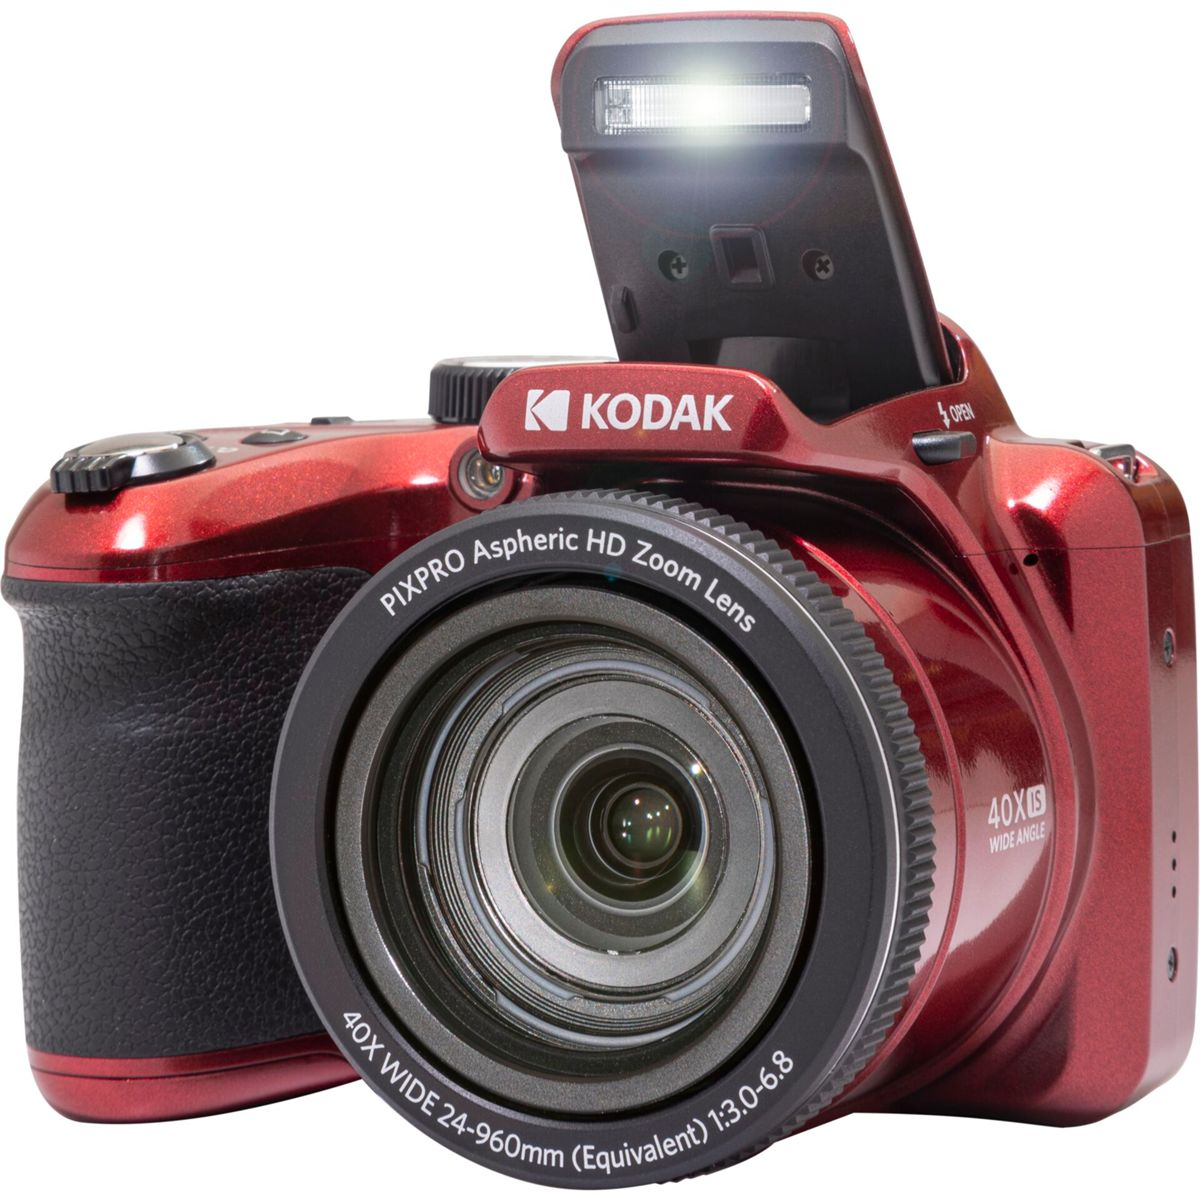 PixPro KODAK Digitalkamera rot rot AZ405